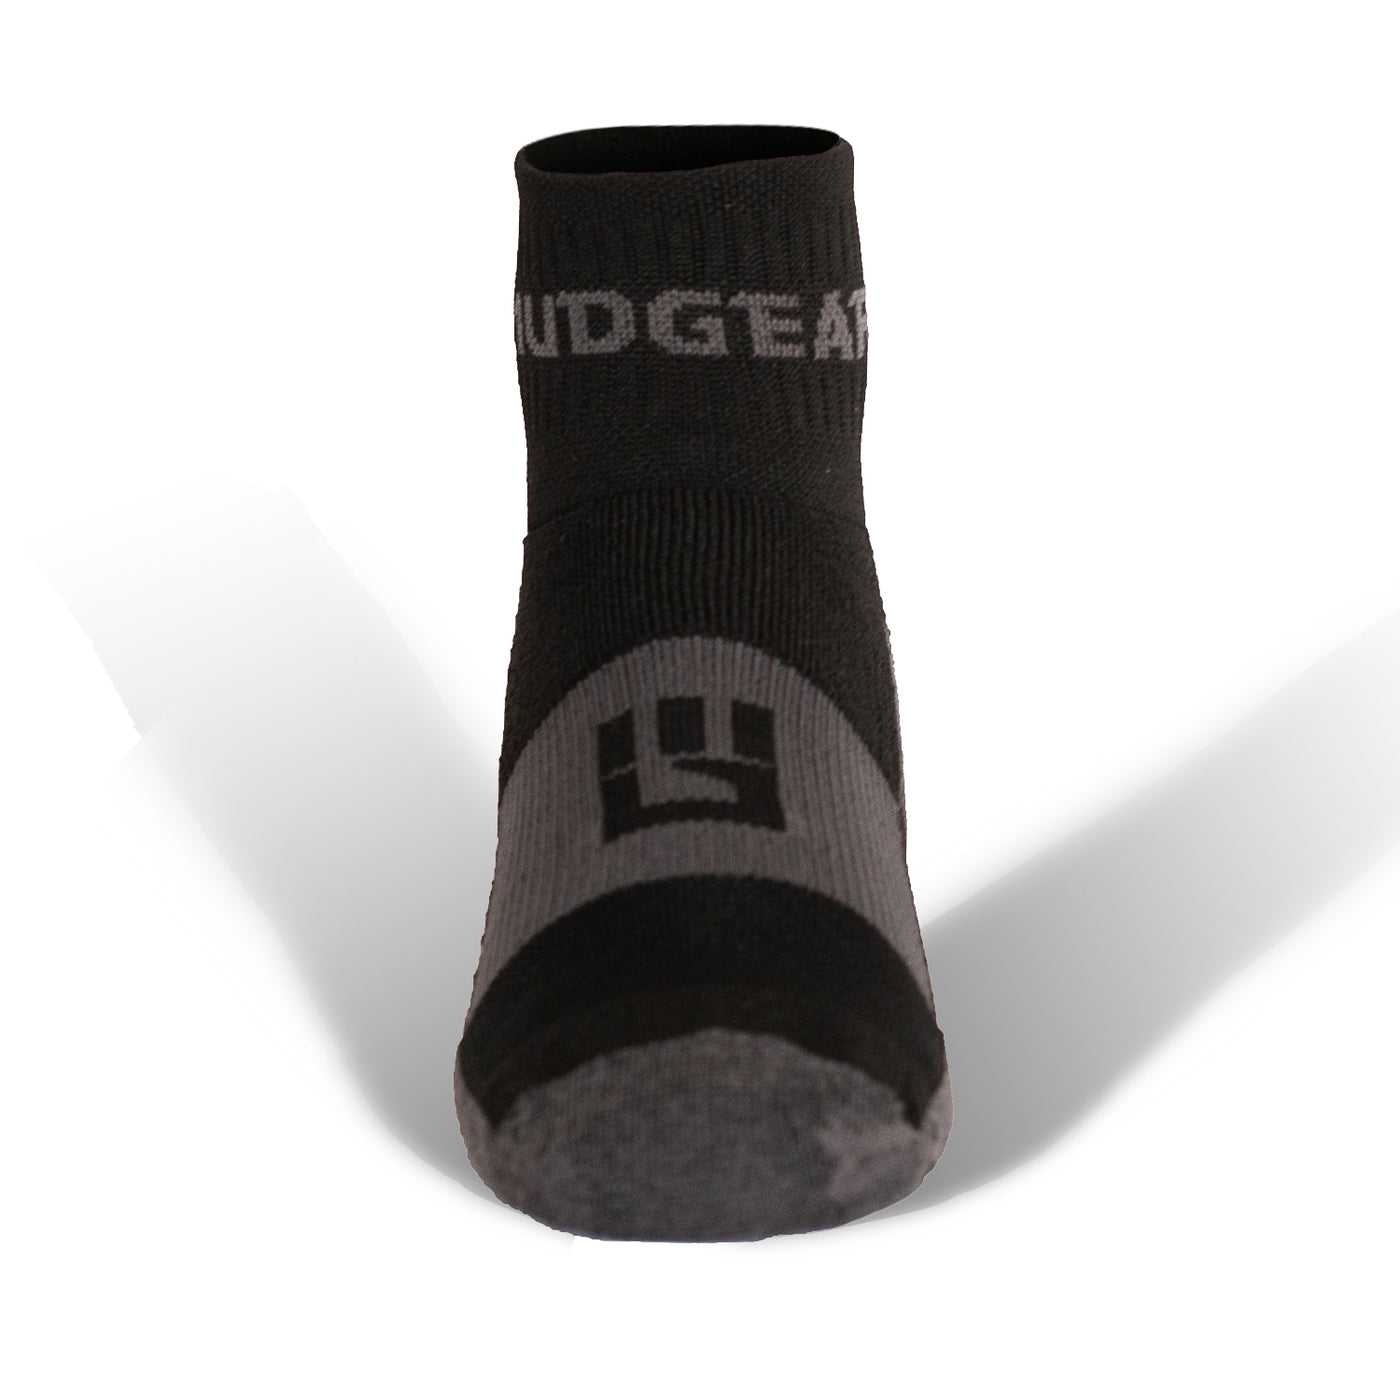 MudGear Quarter (¼) Crew Socks - Black/Gray (2 pair pack)